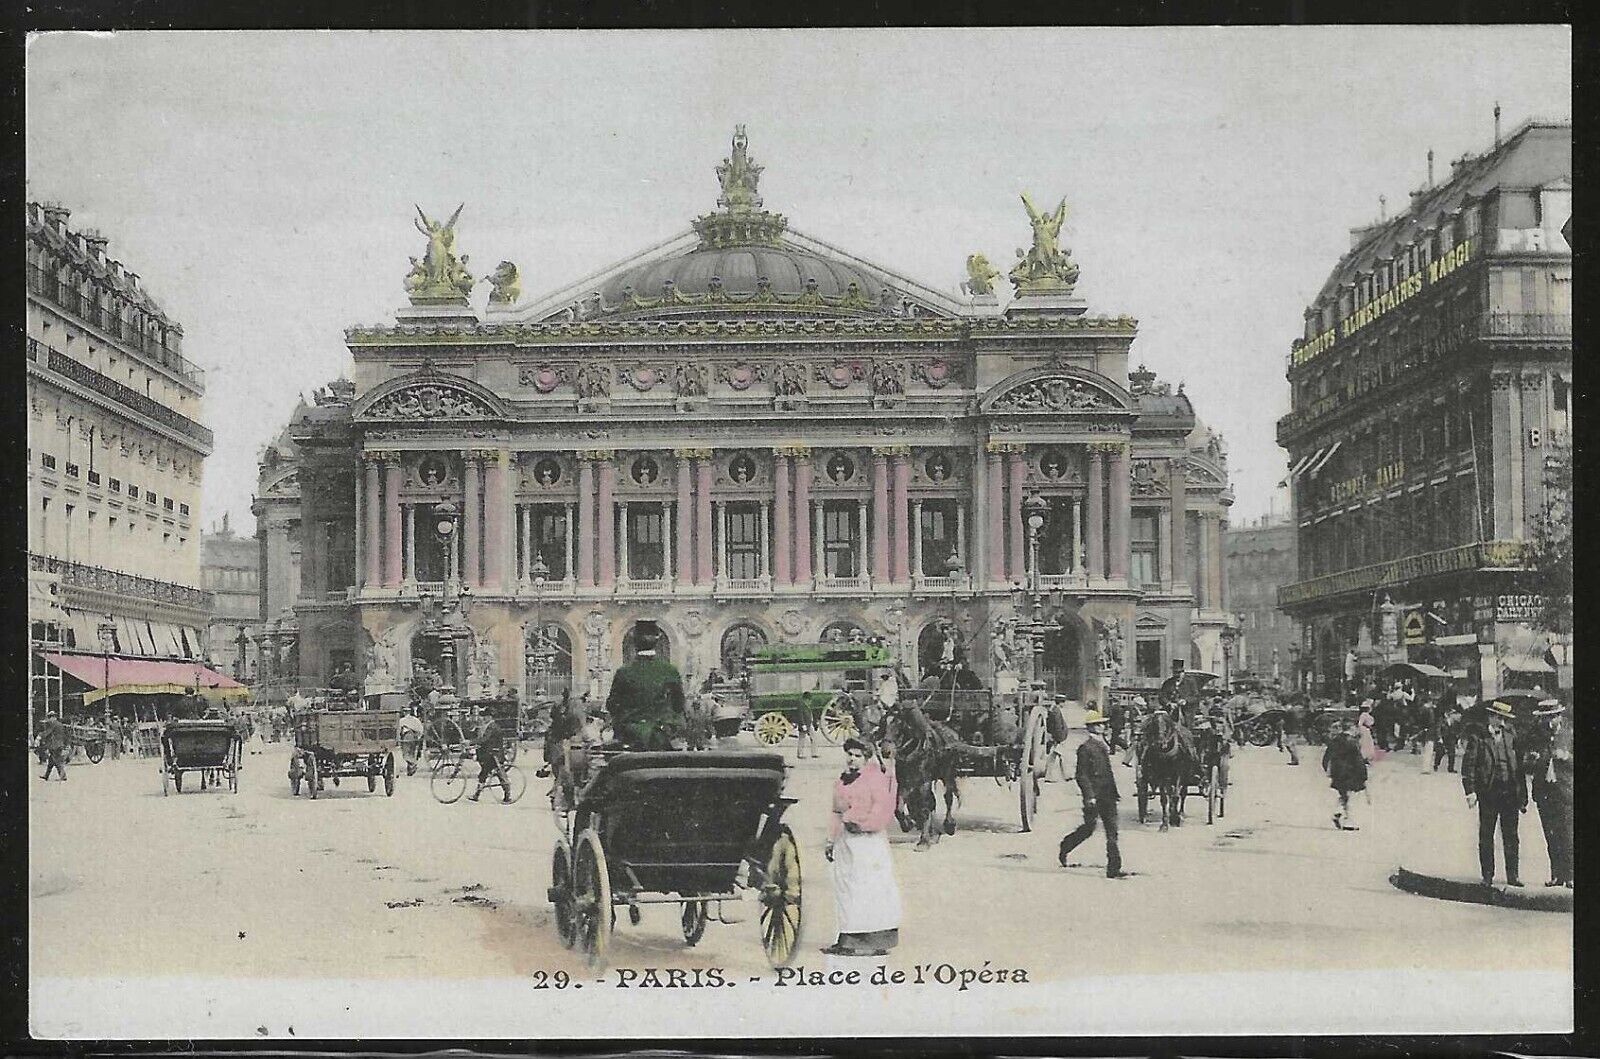 Place de l'Opera, Paris, France, Very Early Handcolored Postcard, Unused